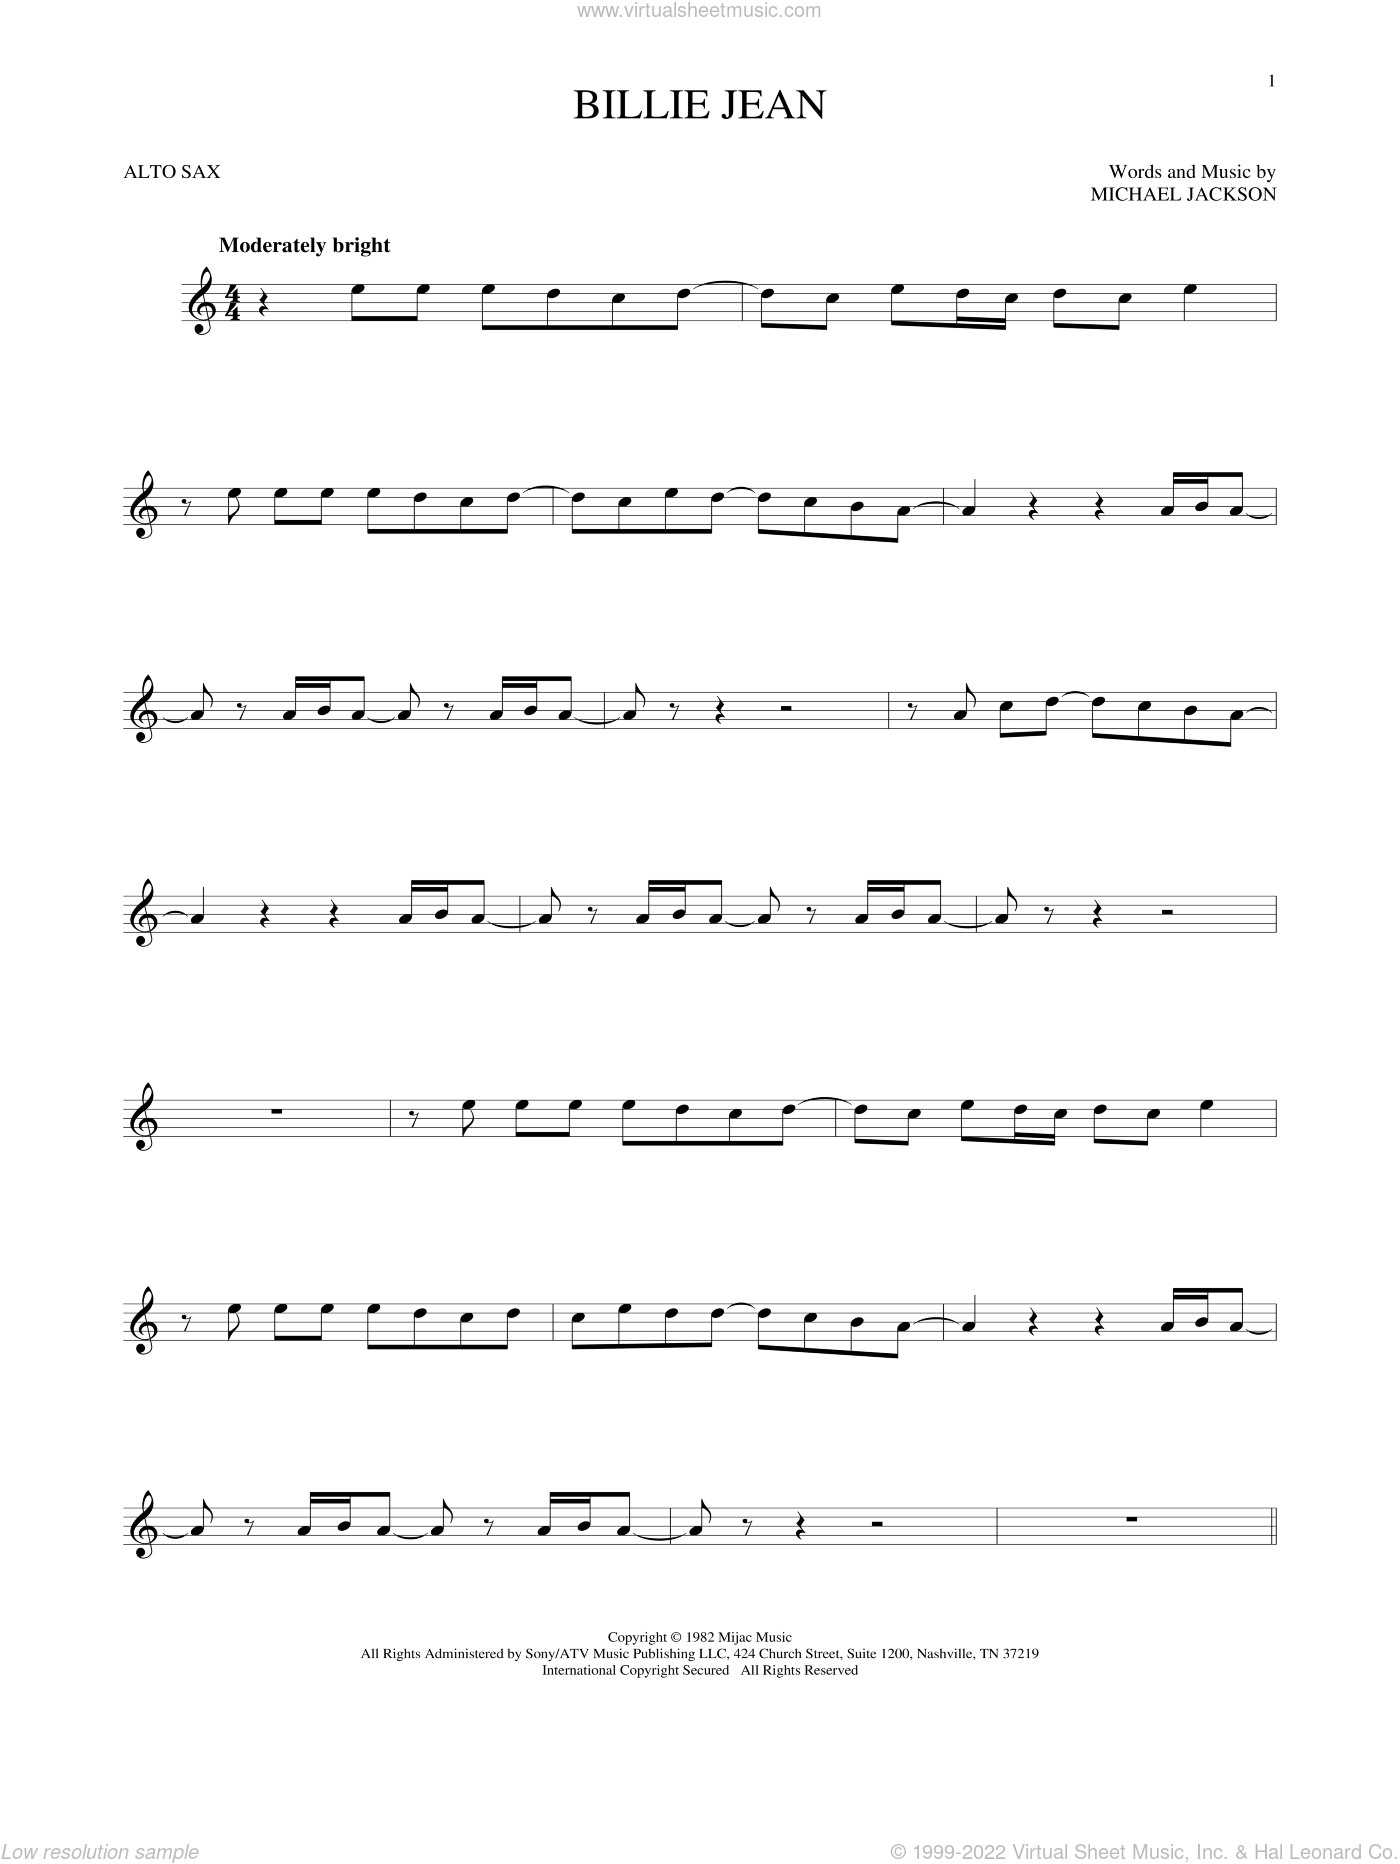 Jackson Billie Jean Sheet Music For Alto Saxophone Solo Pdf